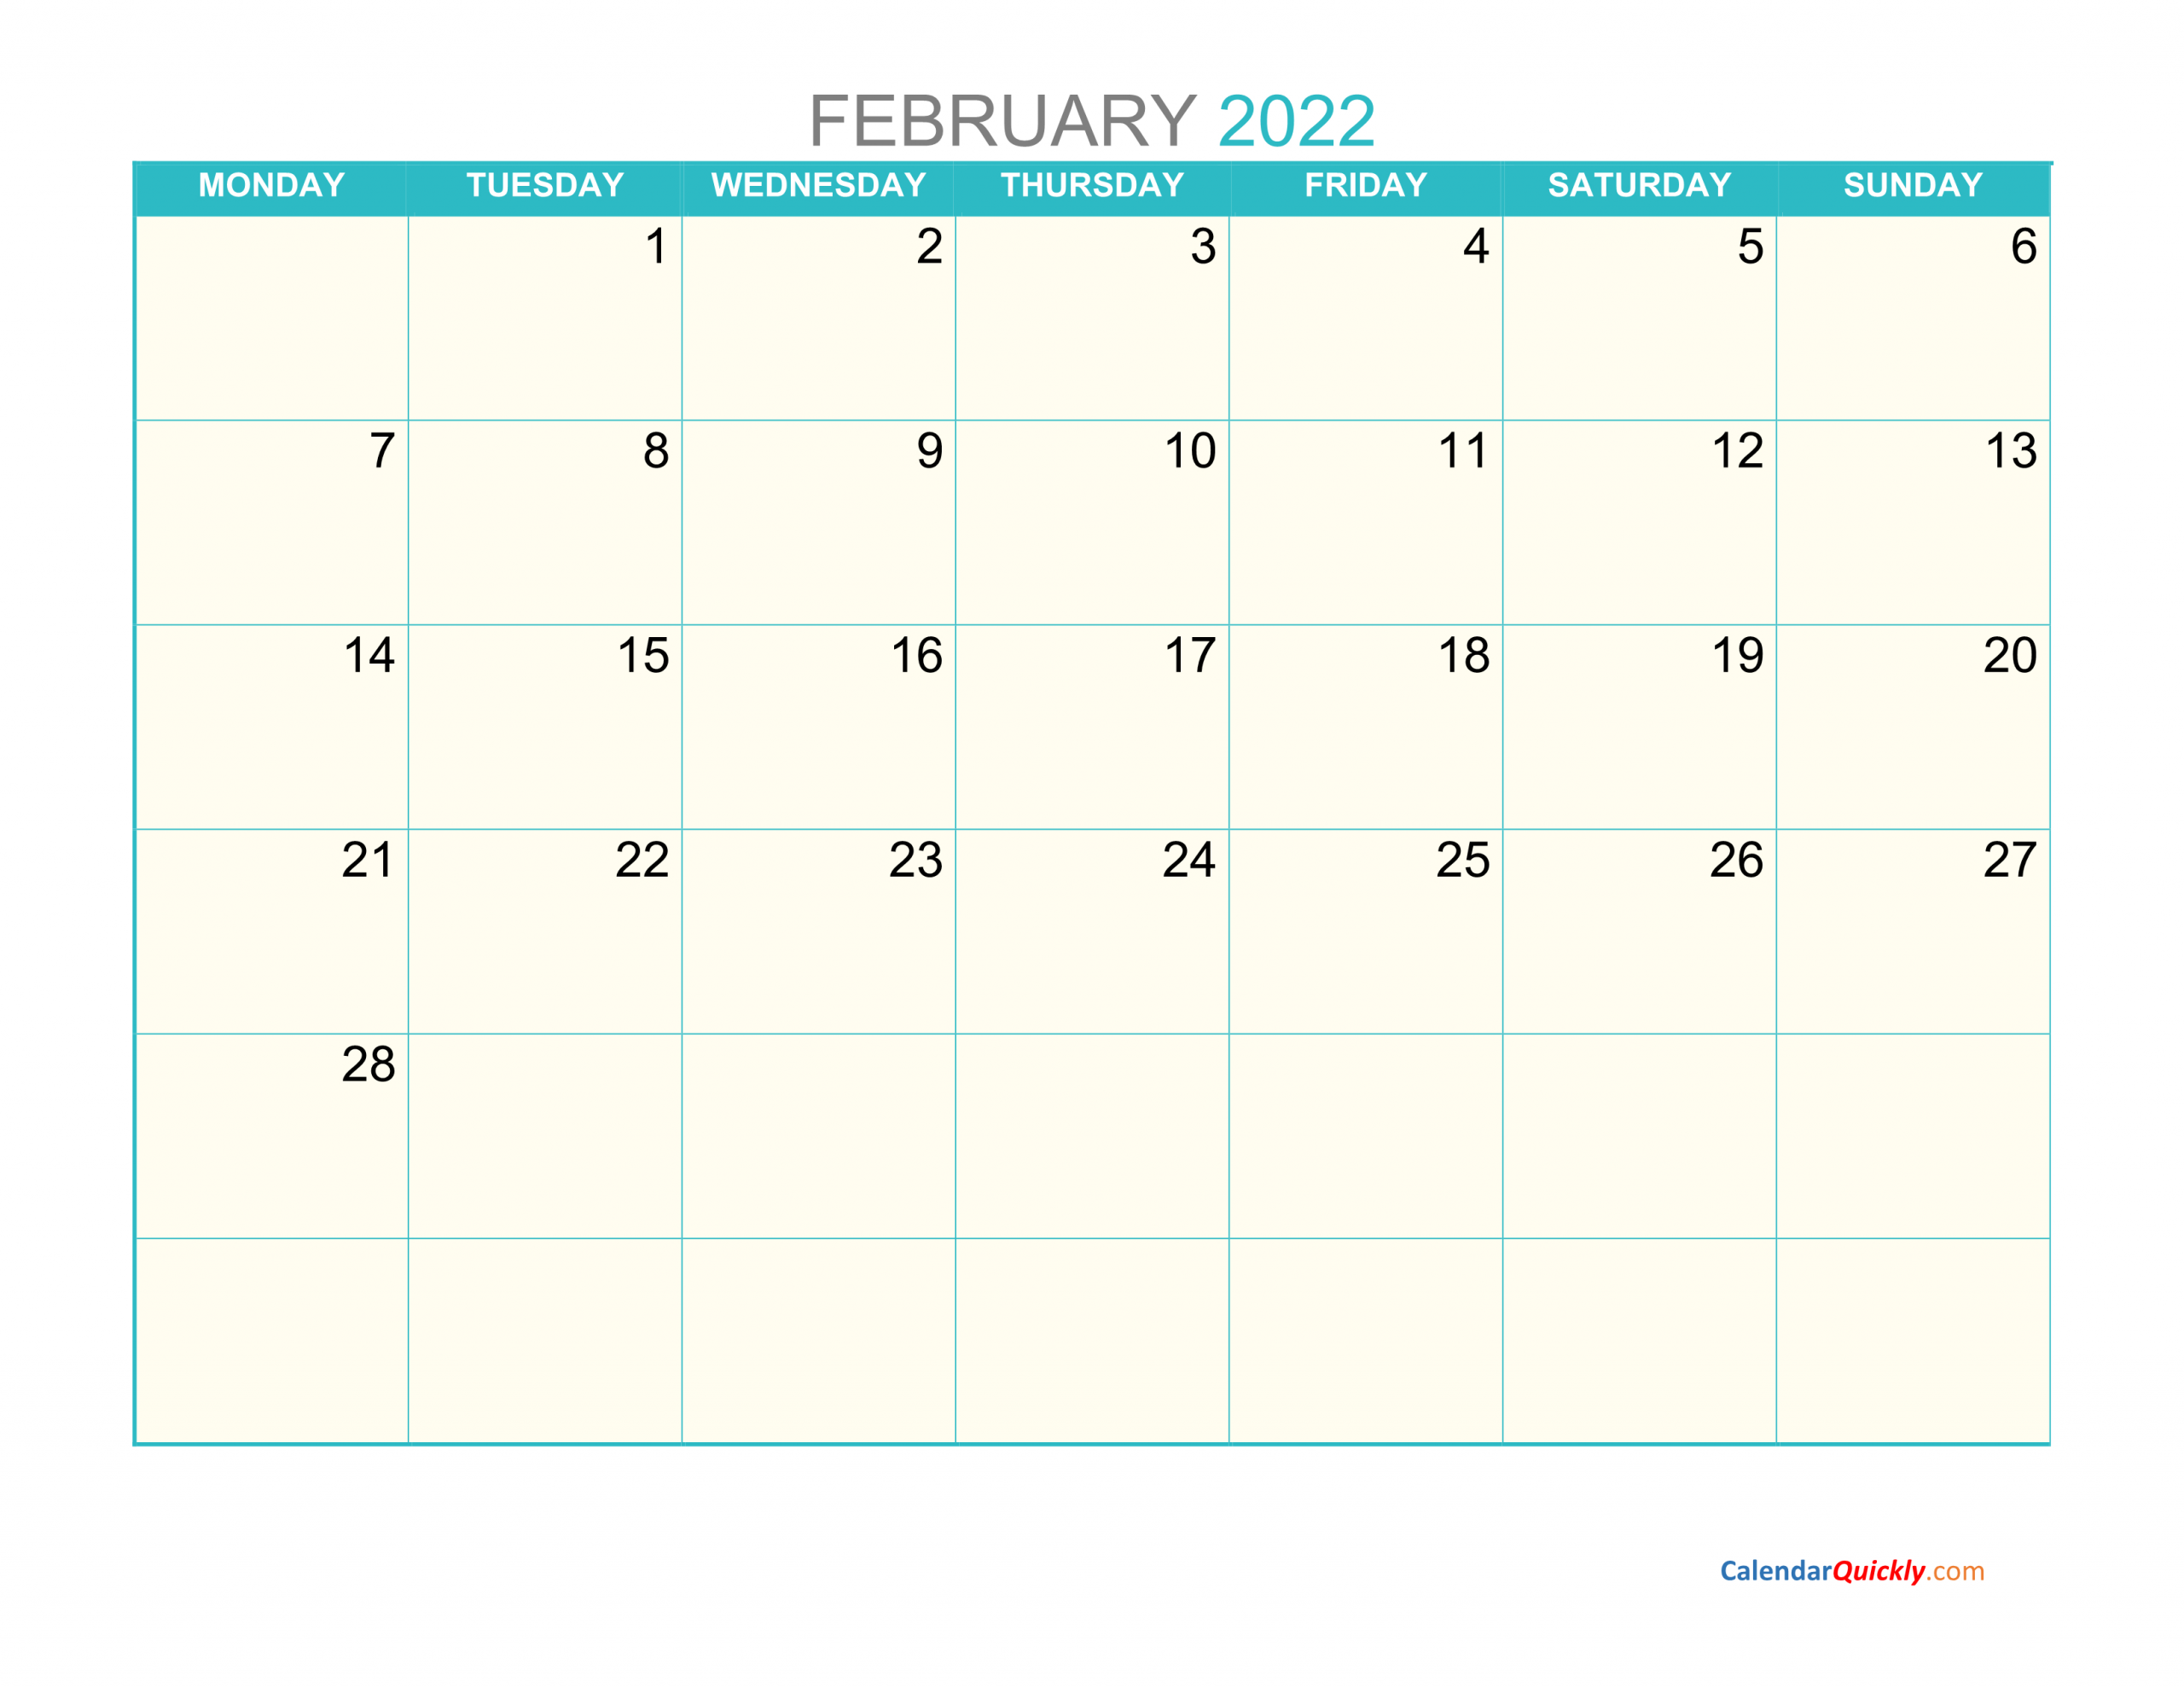 February Monday 2022 Calendar Printable | Calendar Quickly